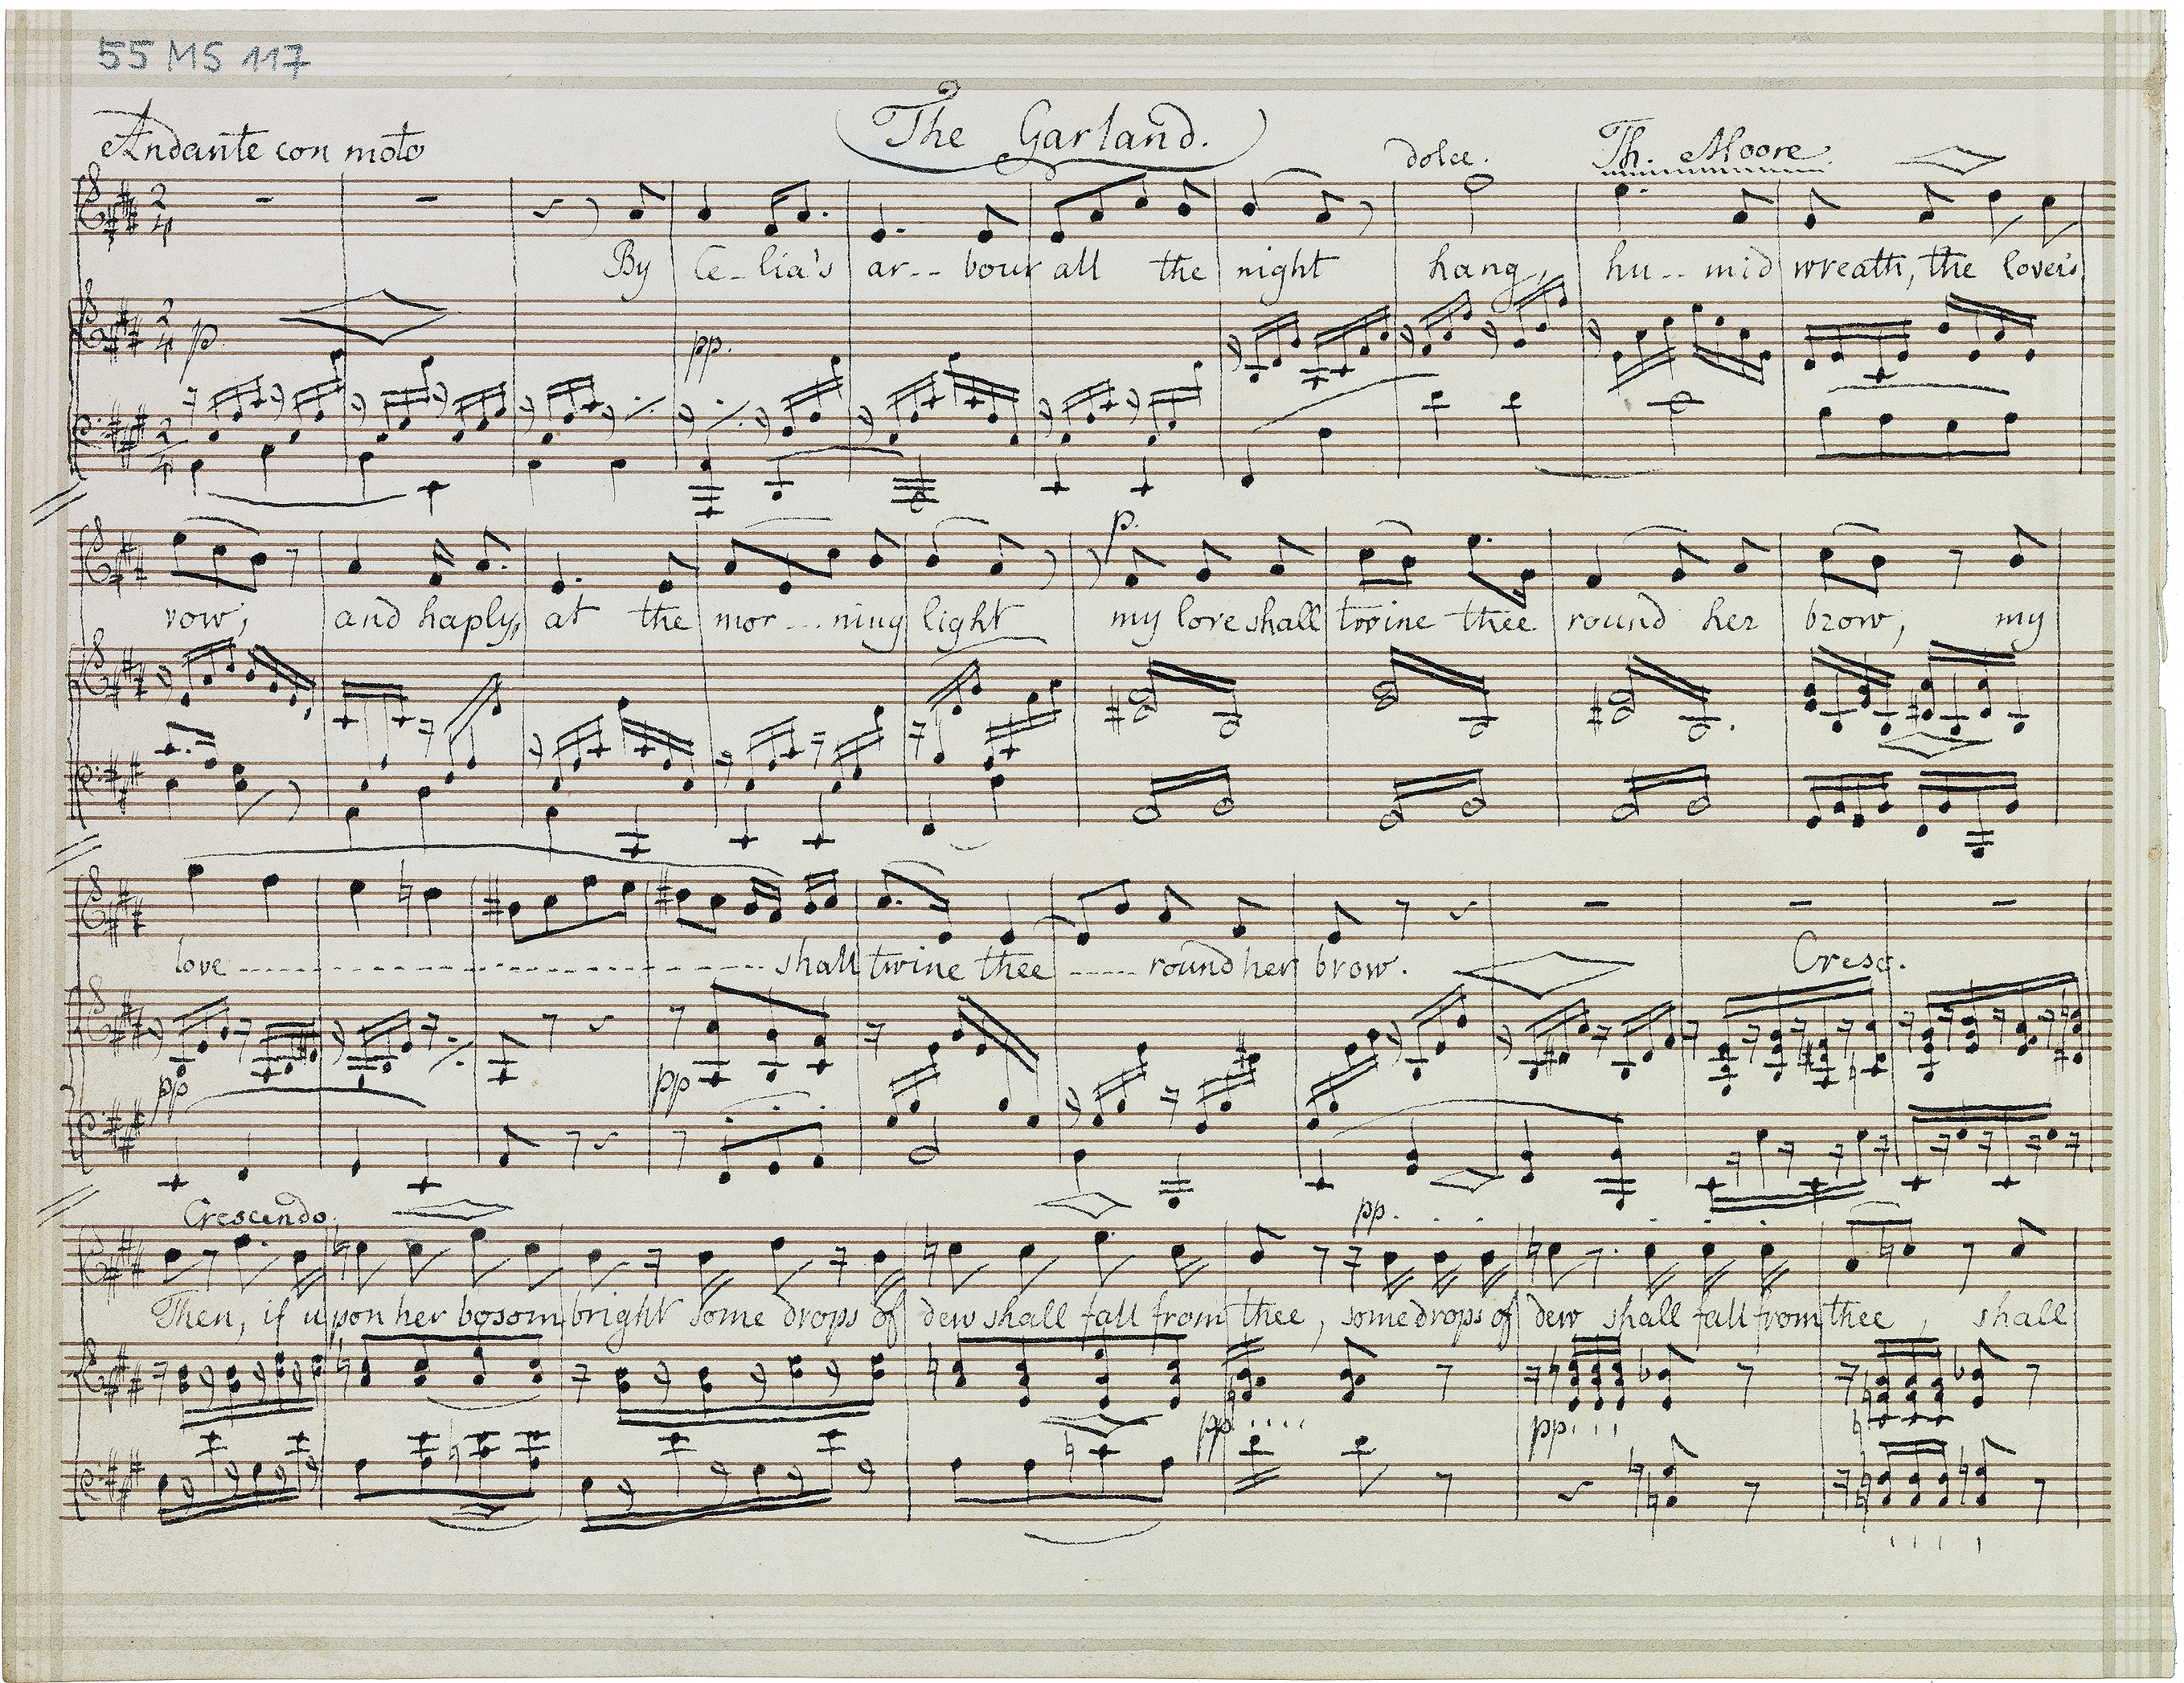 Mendelssohn Garland 55 MS 117